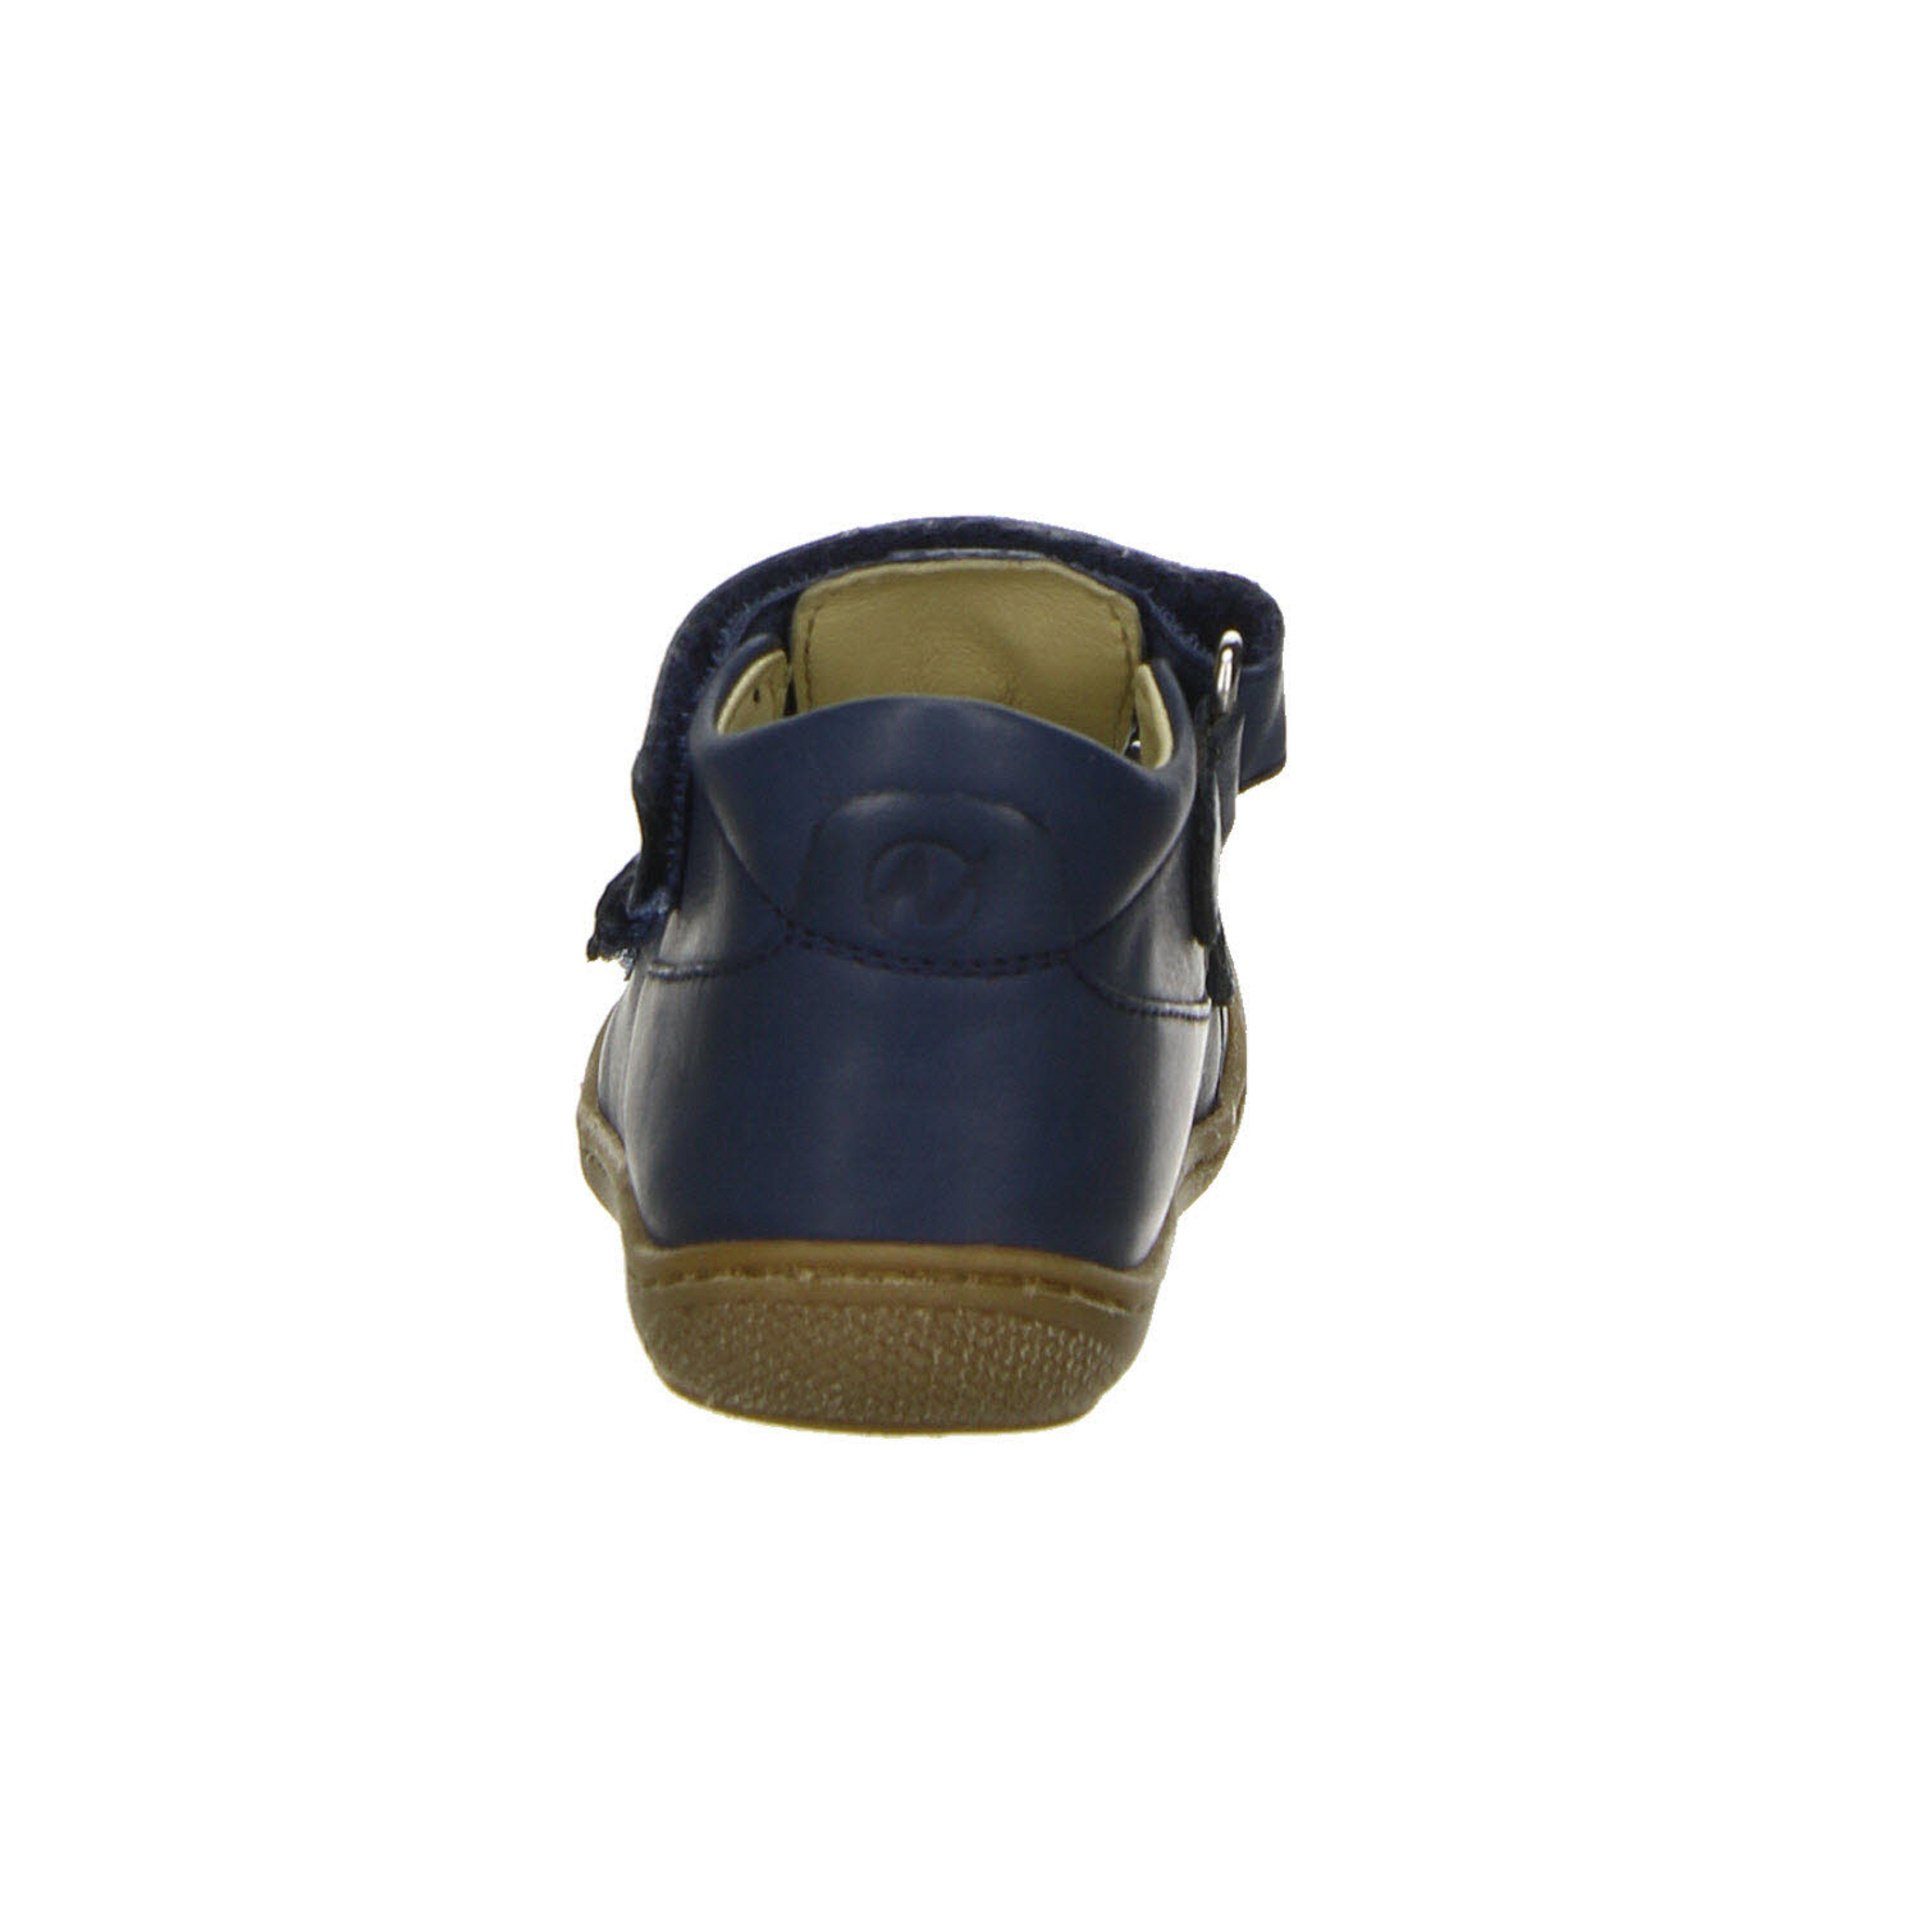 Naturino Jungen Sandalen Lauflernschuh blau dunkel Glattleder Puffy Schuhe Minilette